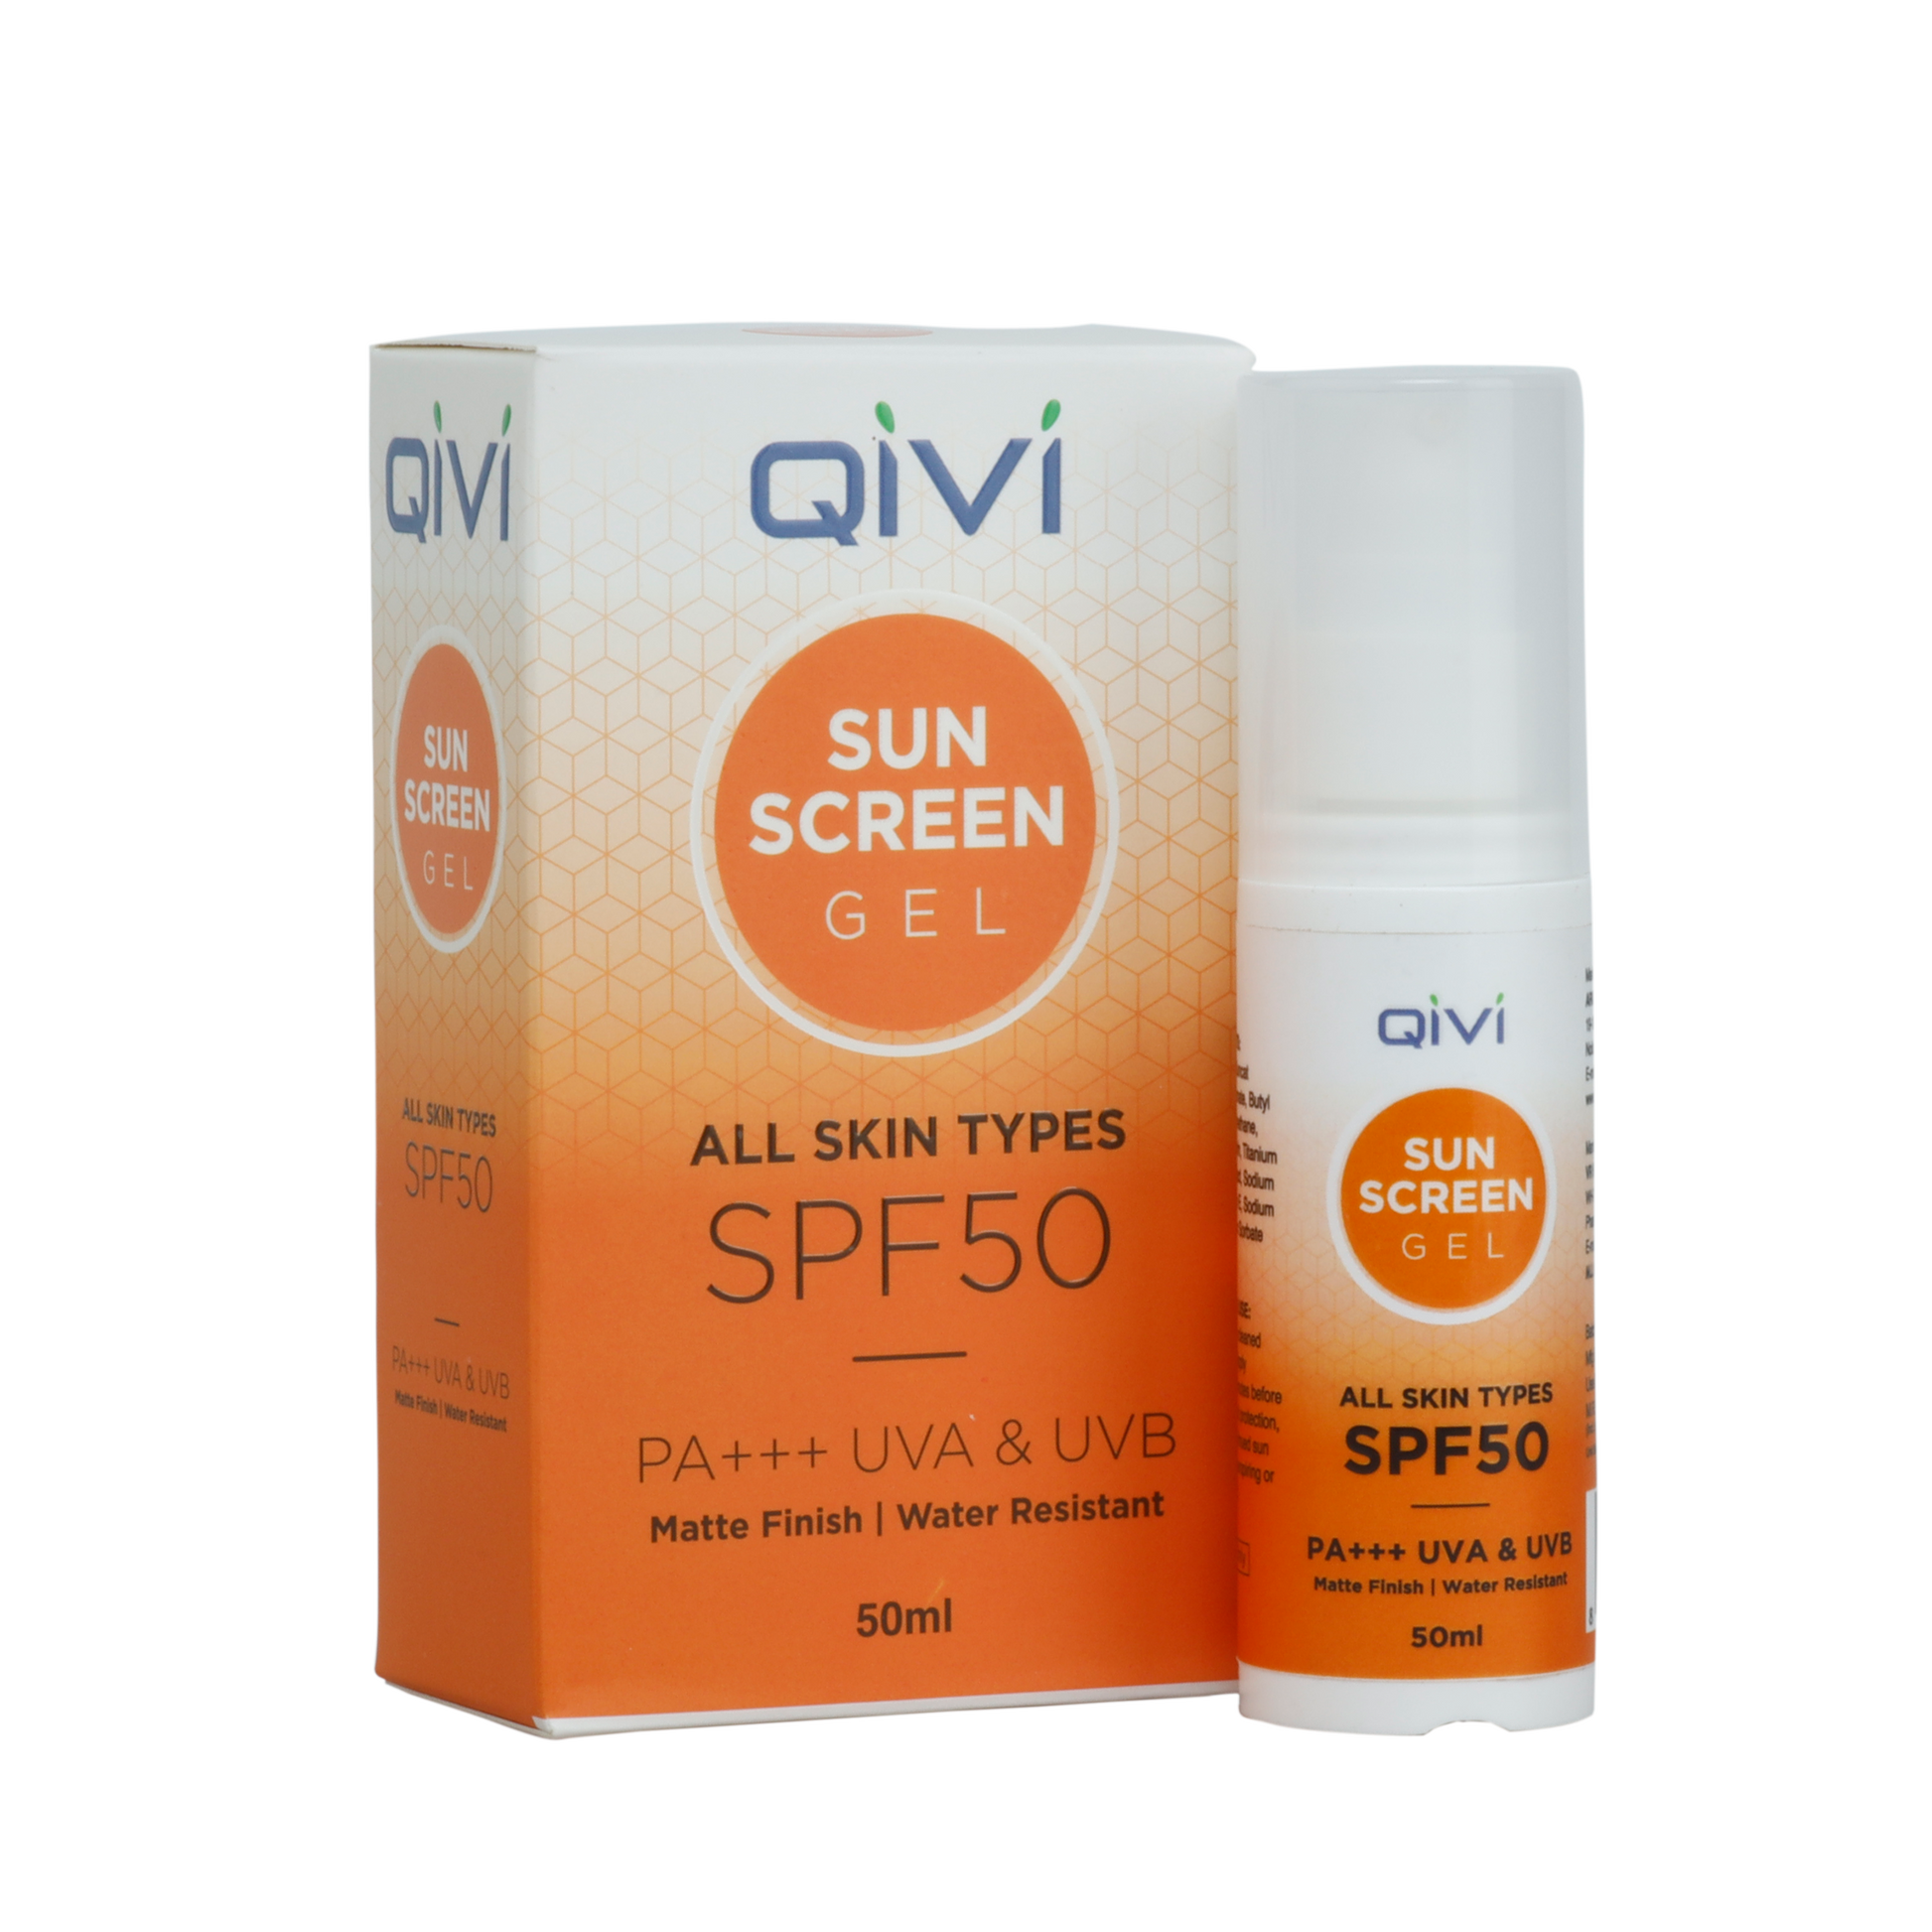 Qivi Sunscreen Gel 